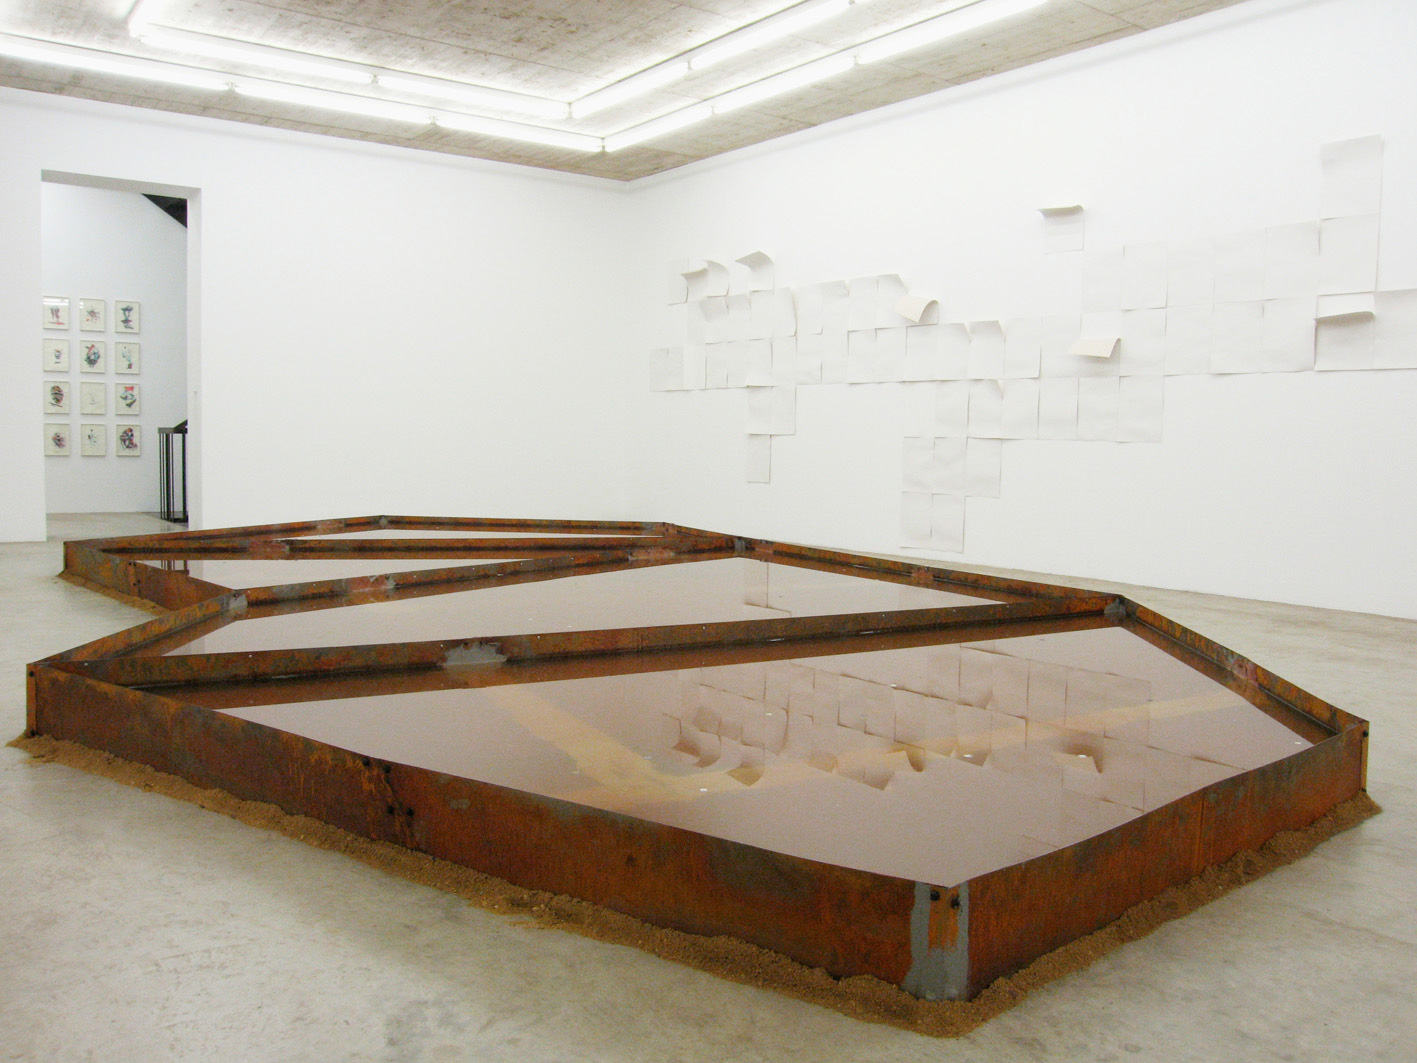 Galerie Barbara Thumm \ Diango Hernández &#8211; Swans without a lake  &#8211; Neuer Aachener Kunstverein, Aachen